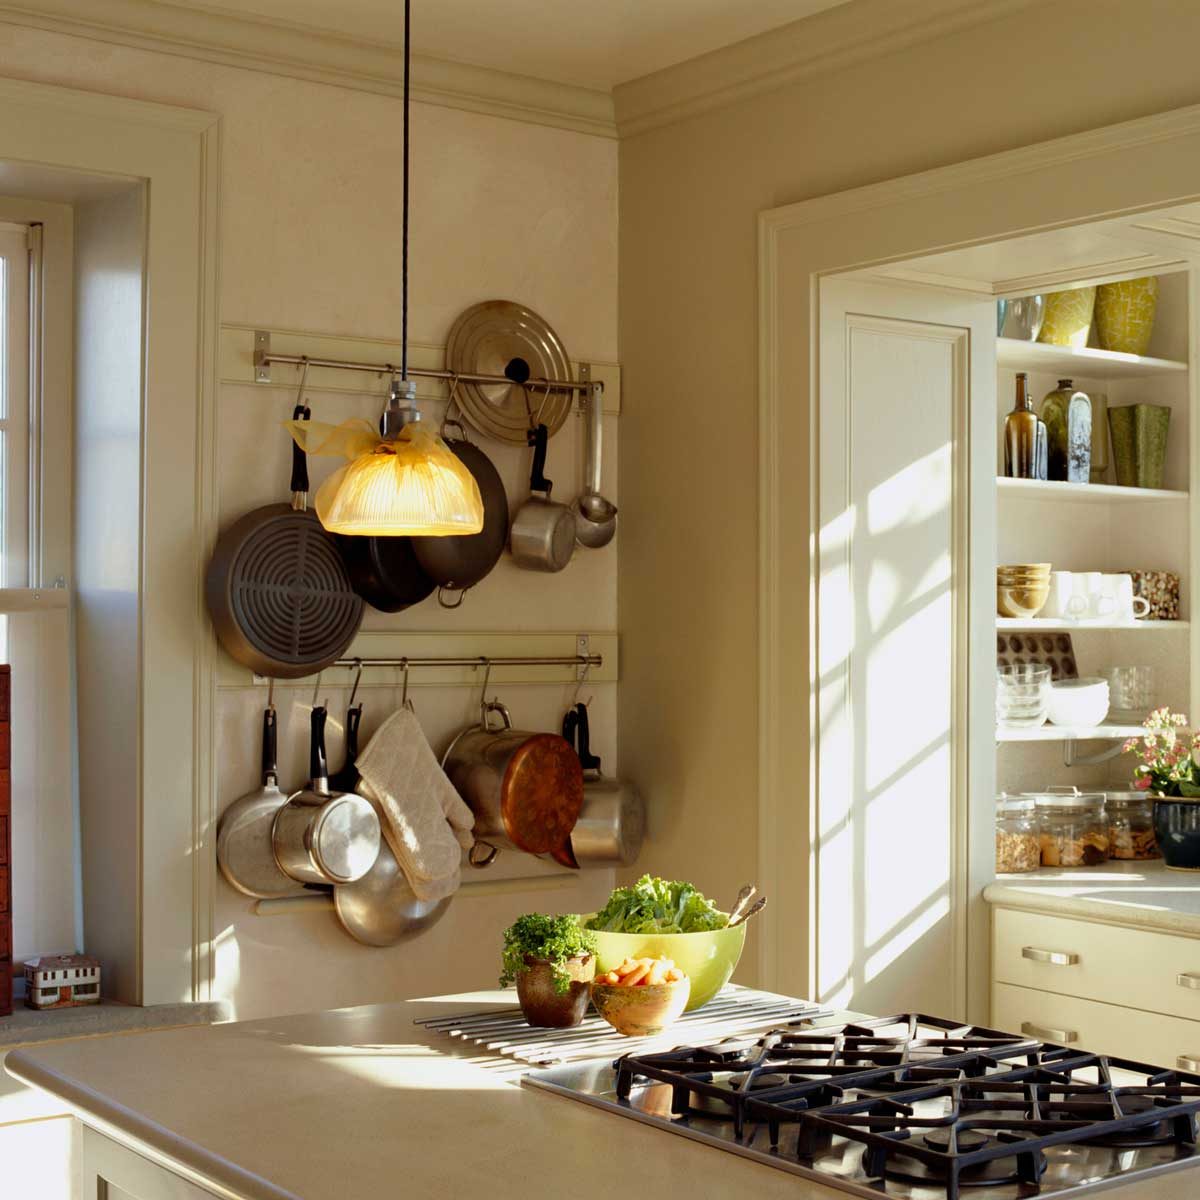 8 Best Pot Racks for Your Kitchen | The Family Handyman